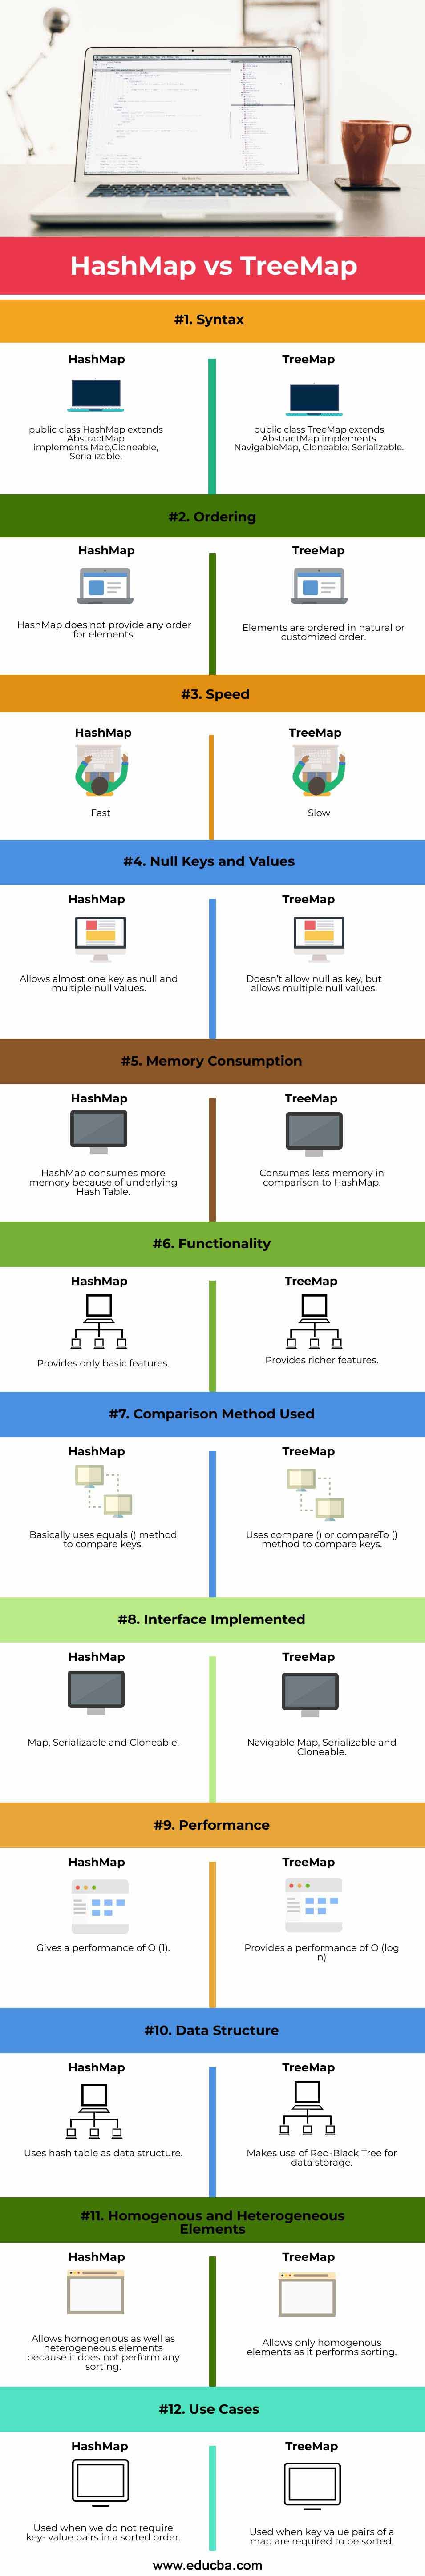 HashMap-vs-TreeMap-info